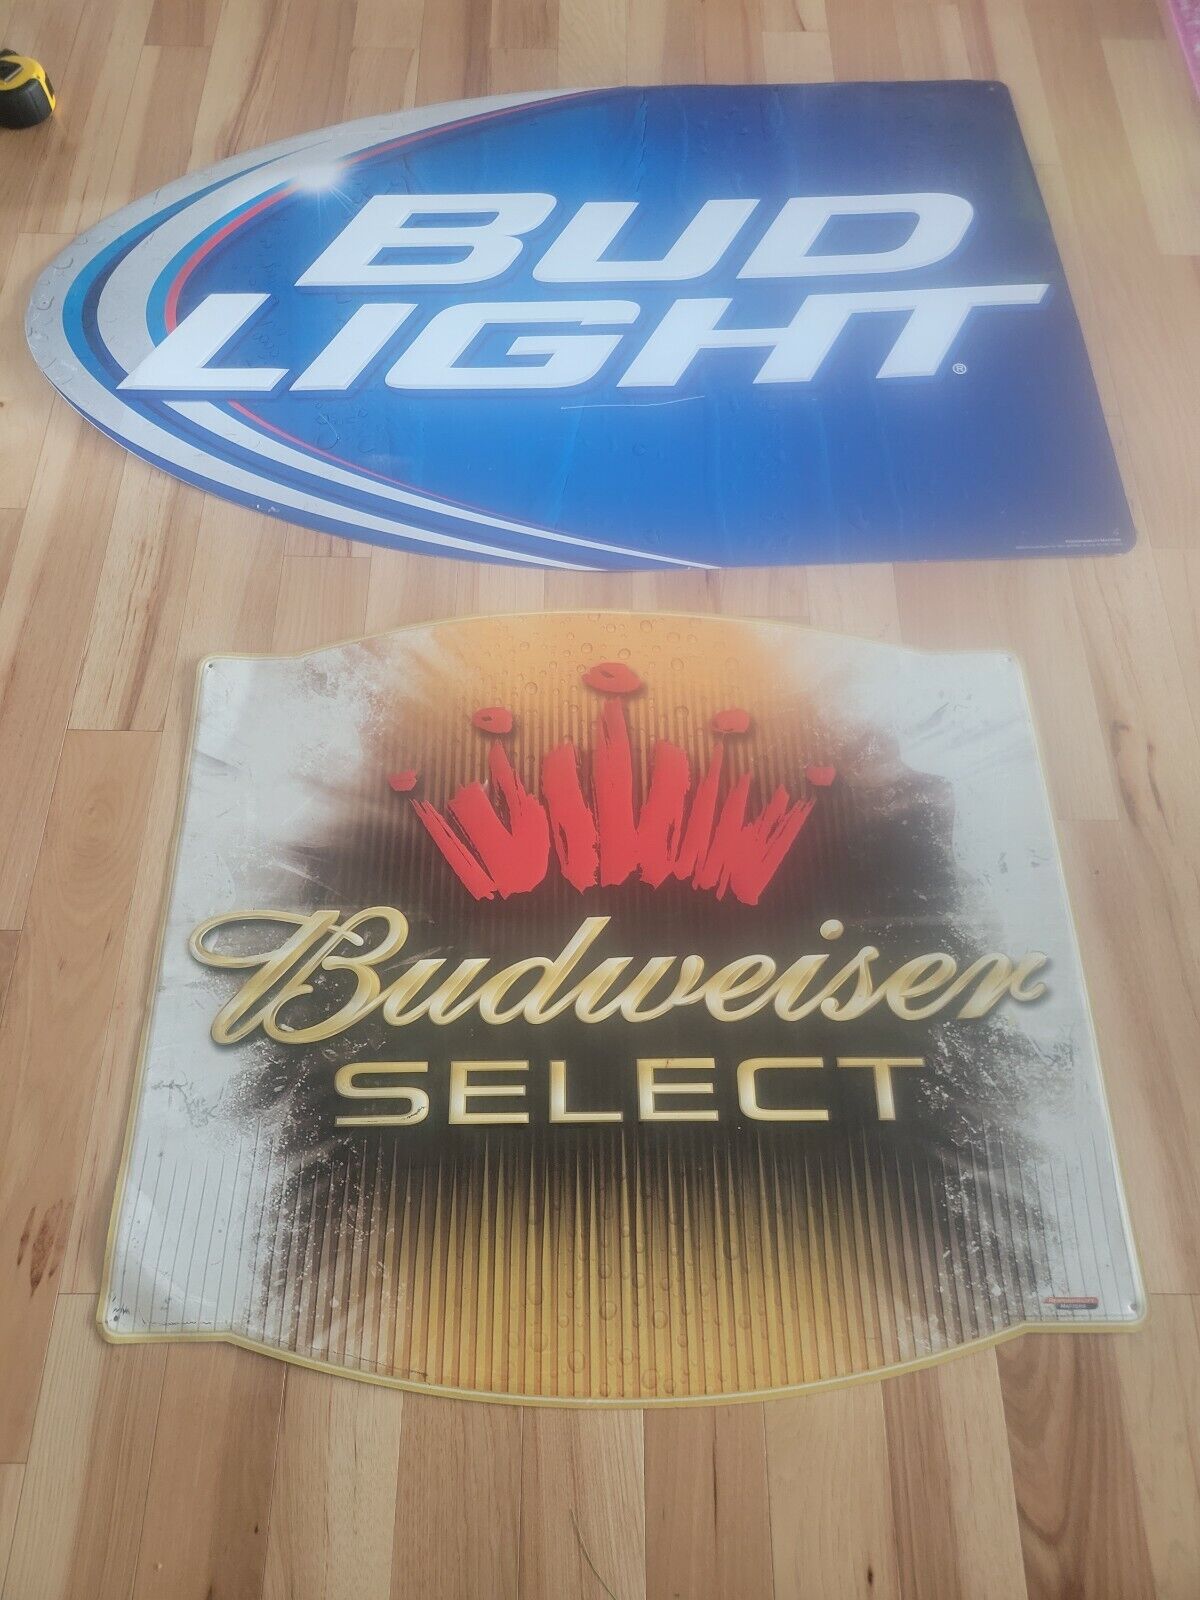  2 Large Bud Light Beer And Budwesier Select Metal Tin Sign 46\